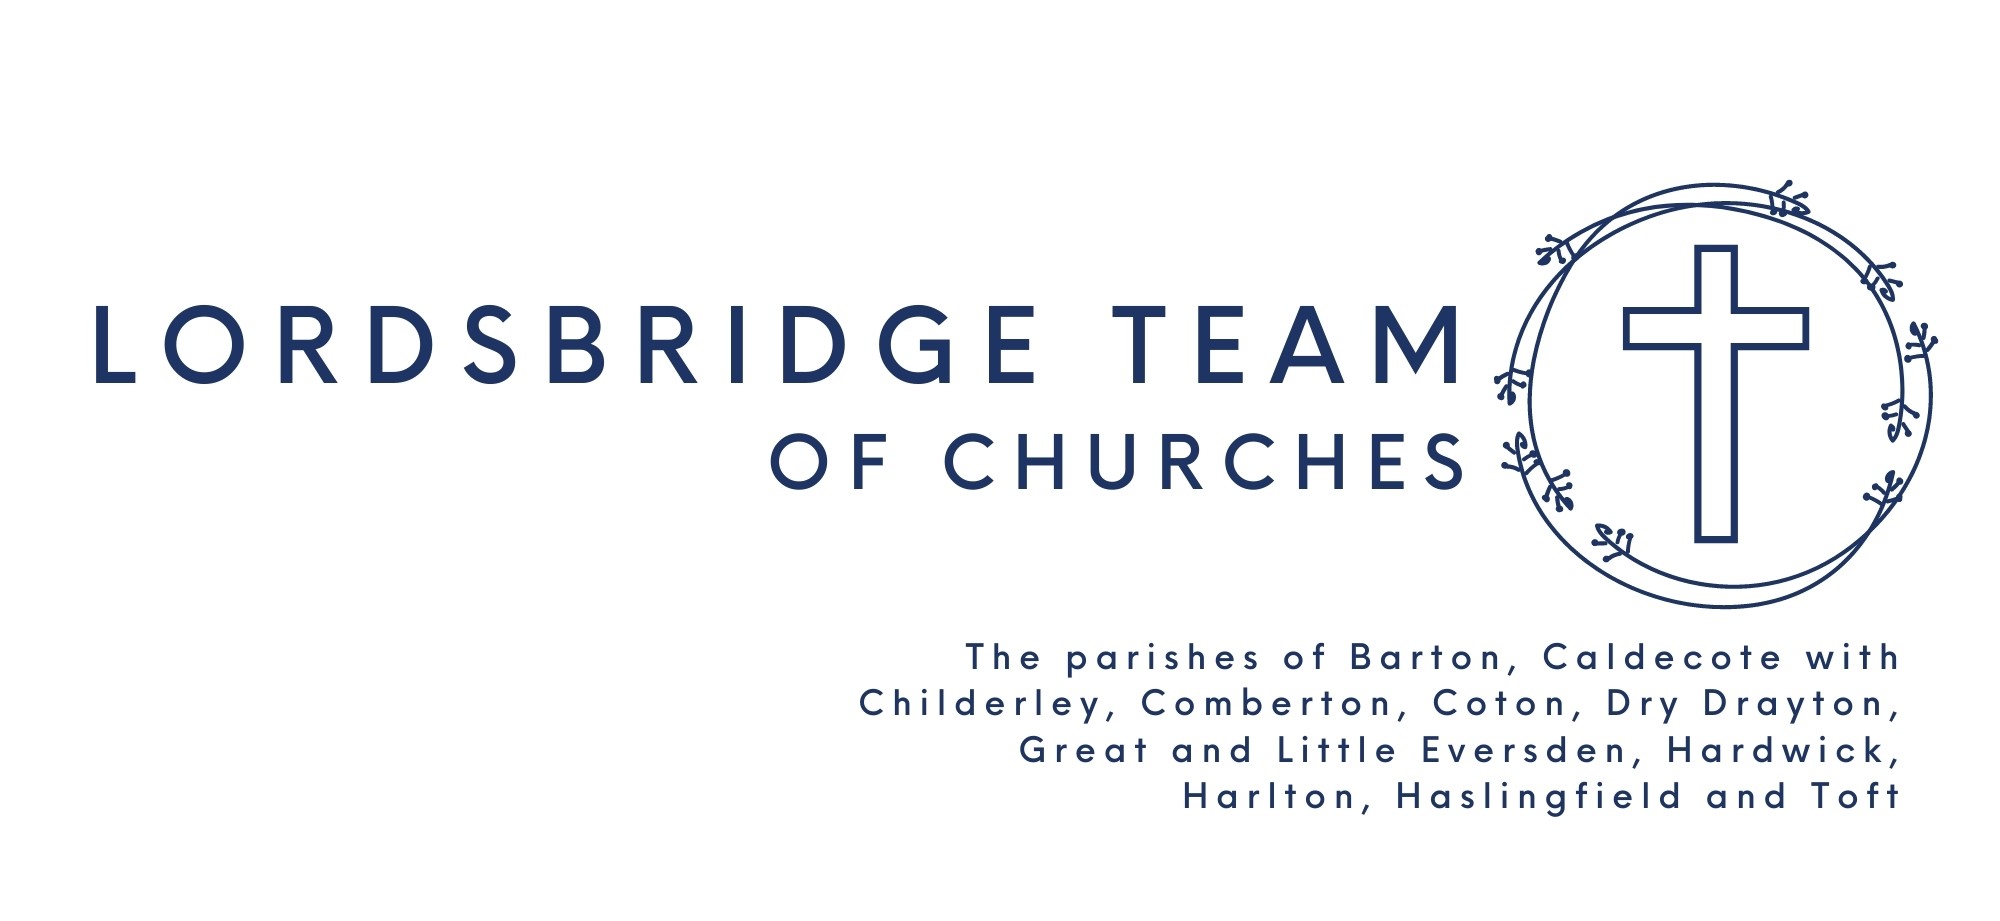 The Lordsbridge Team of Churches